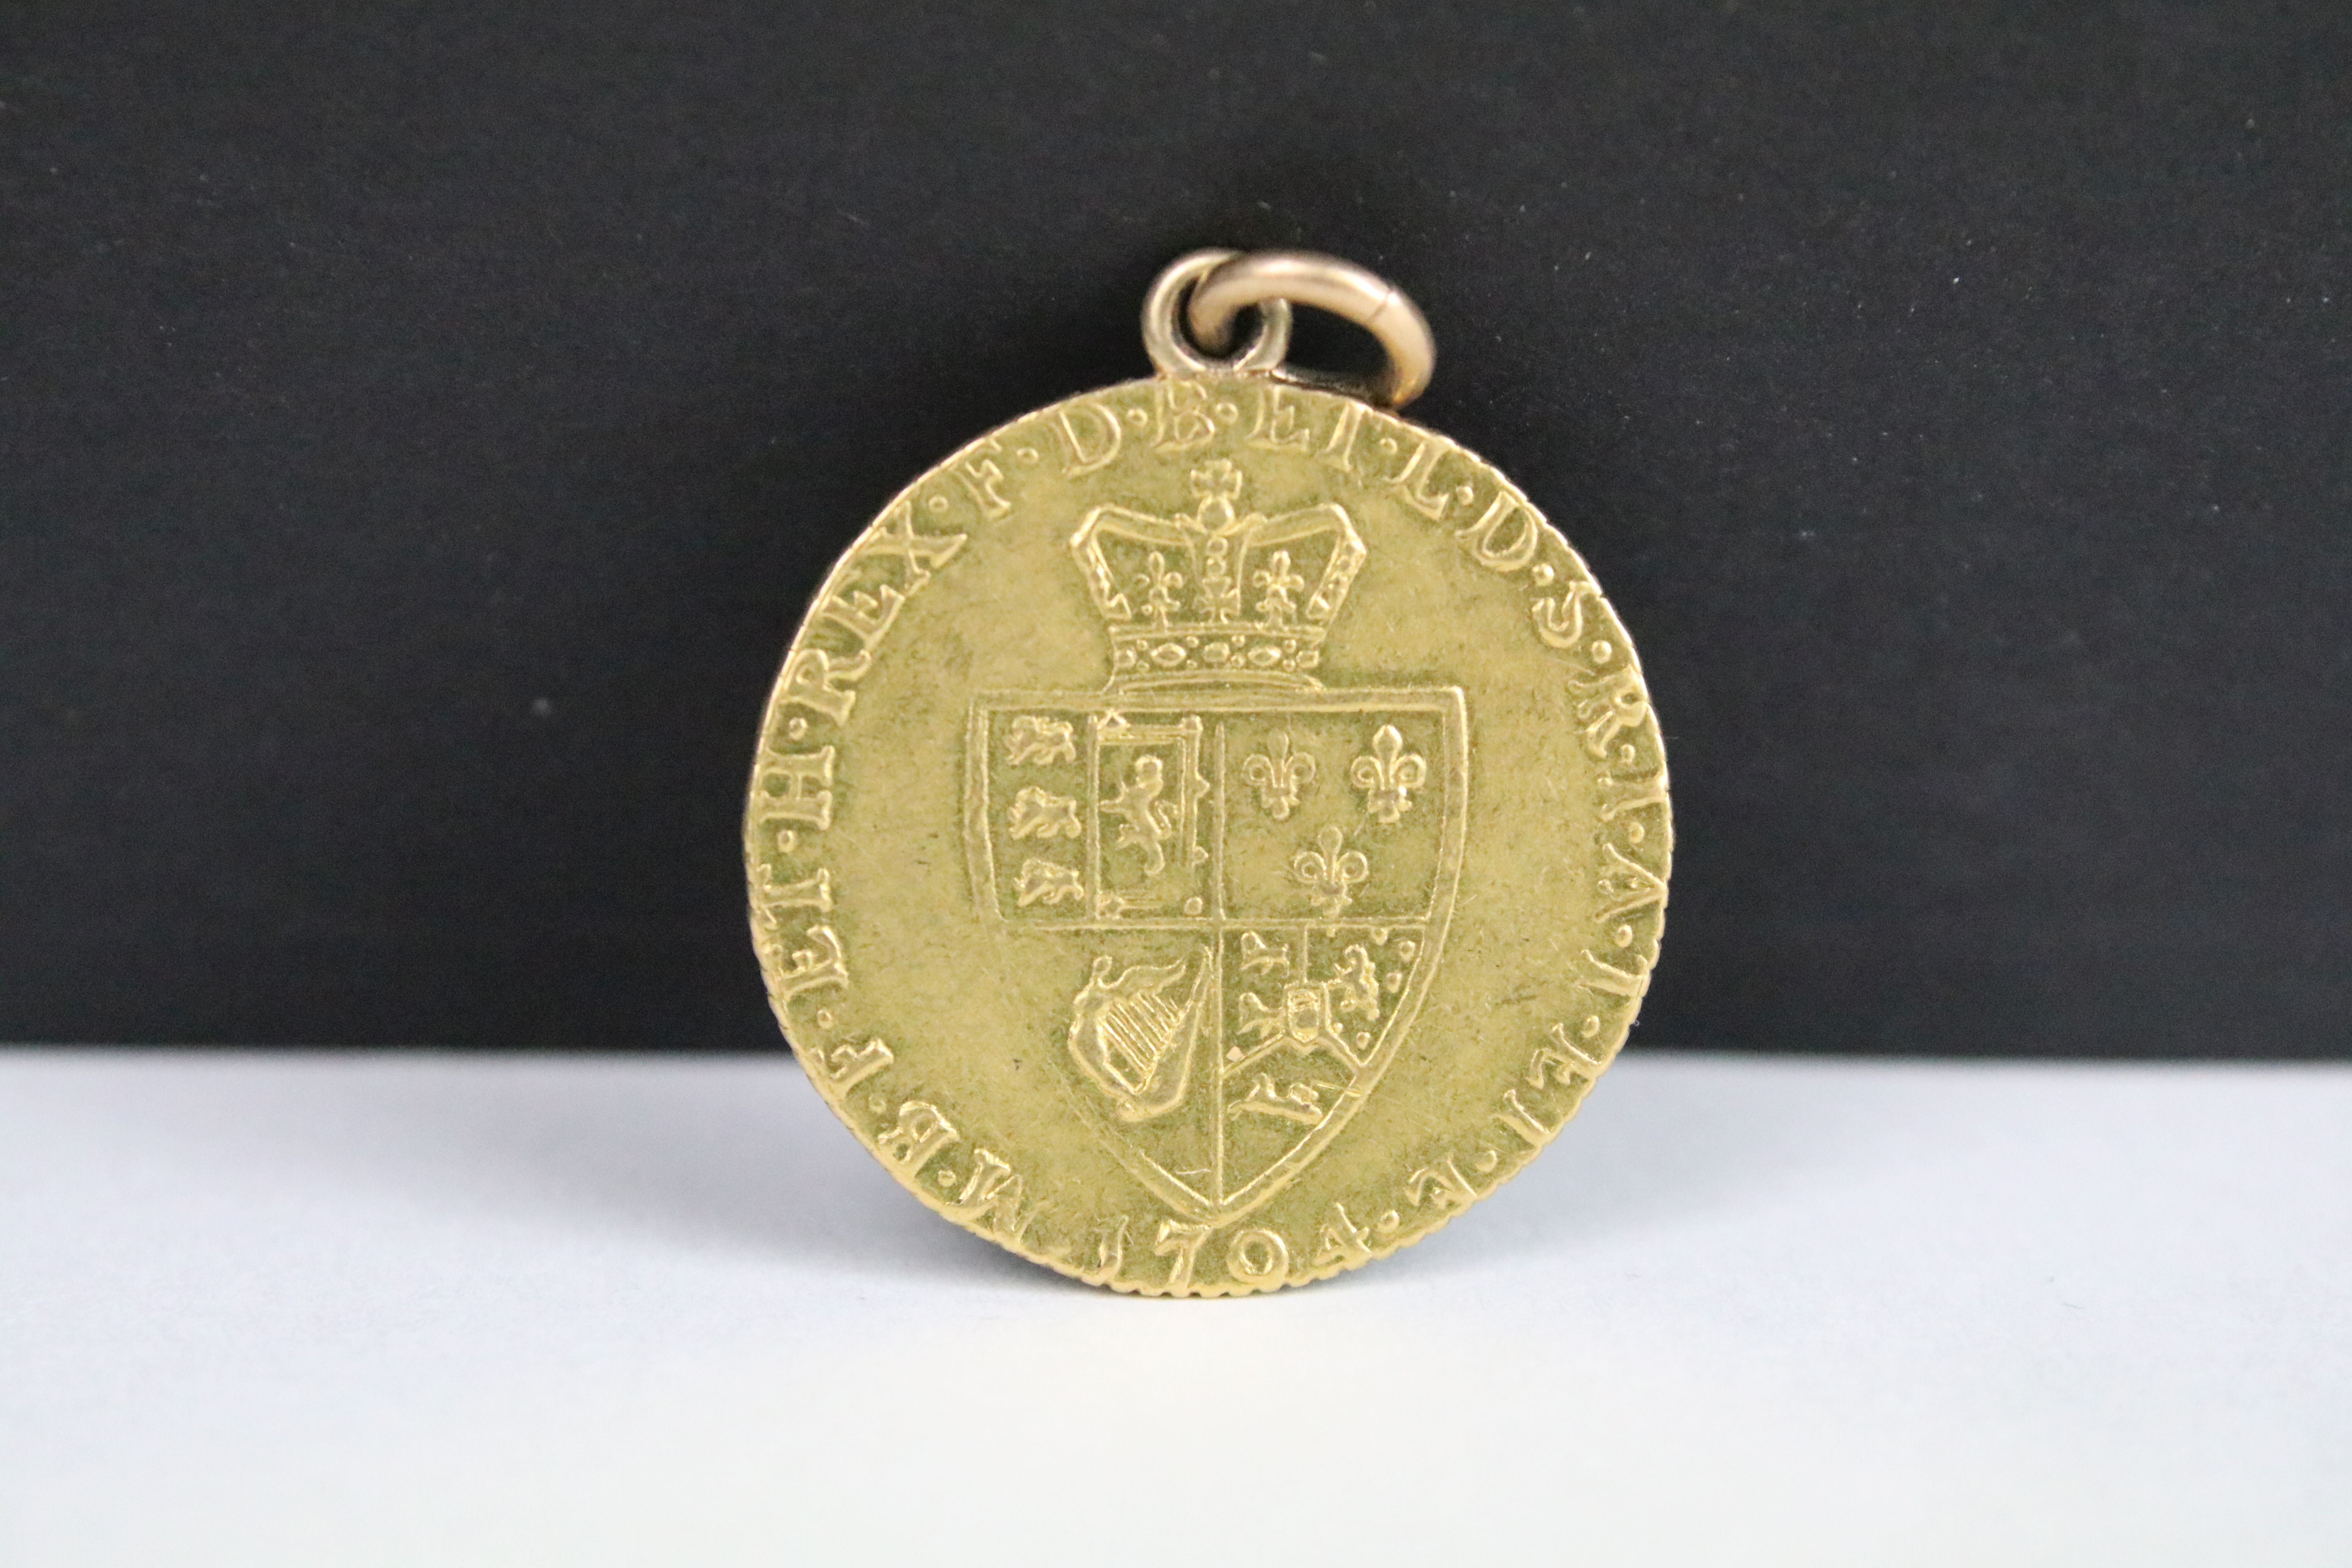 A British King George III 1794 gold full guinea coin.